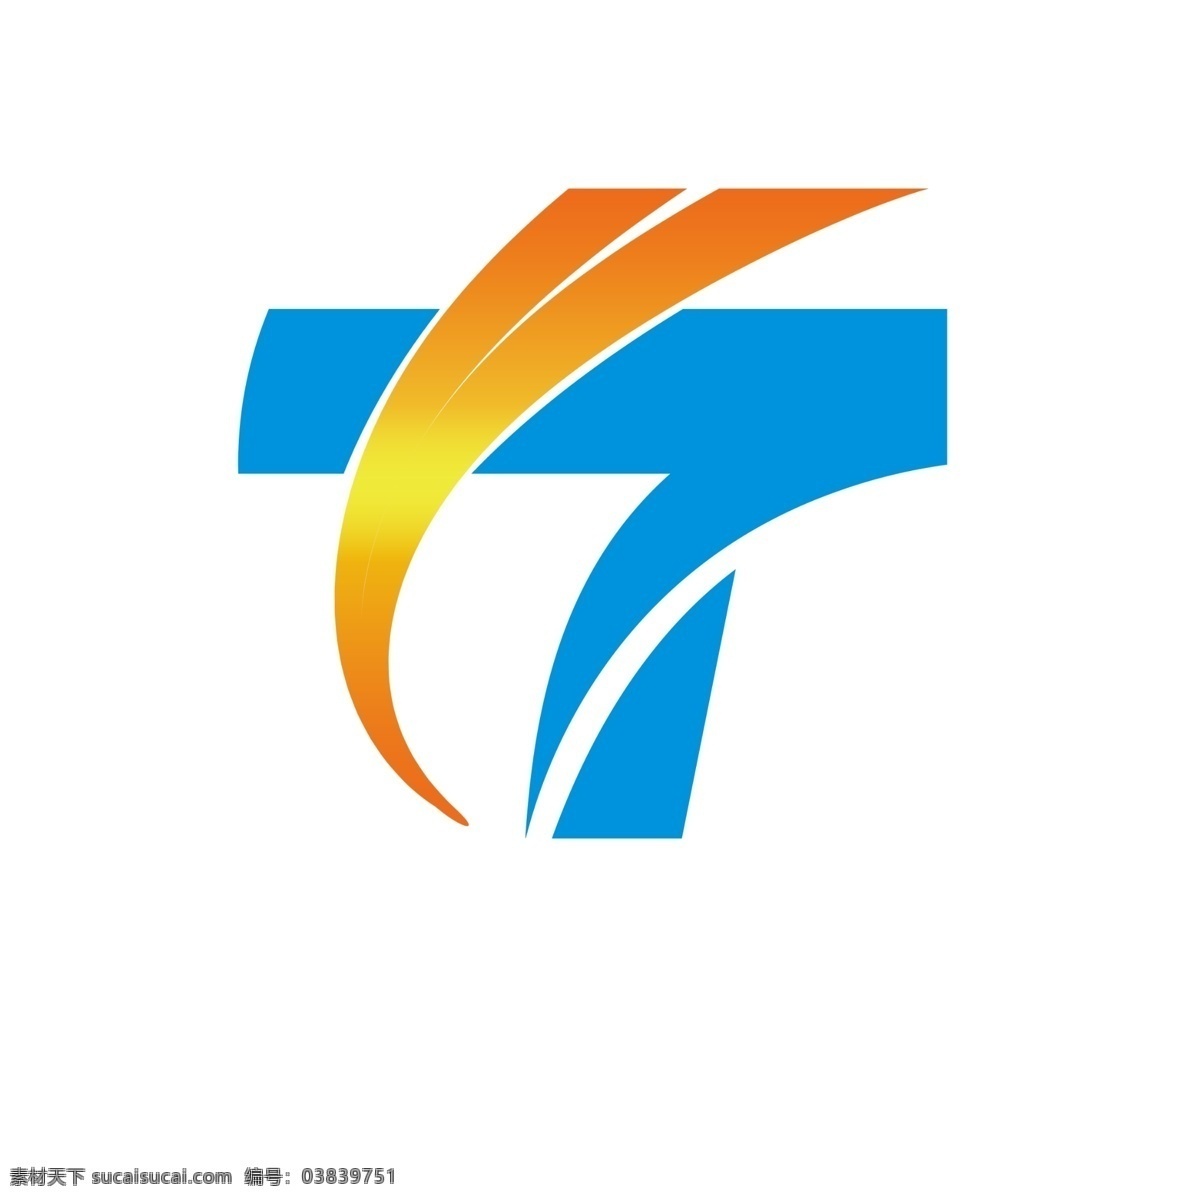 ft yt yq 企业标志 logo 标志 企业logo logo设计